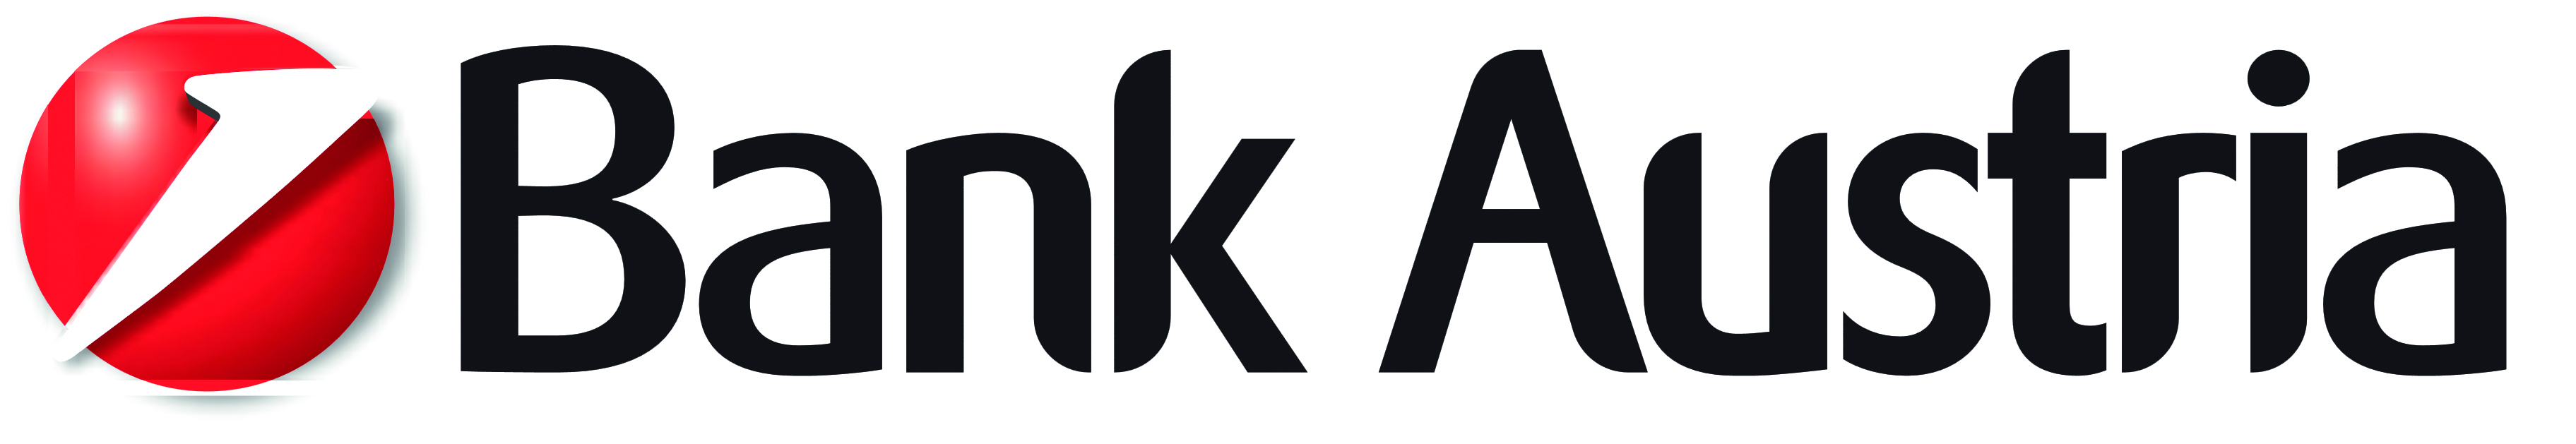 bank_austria_logo.jpg